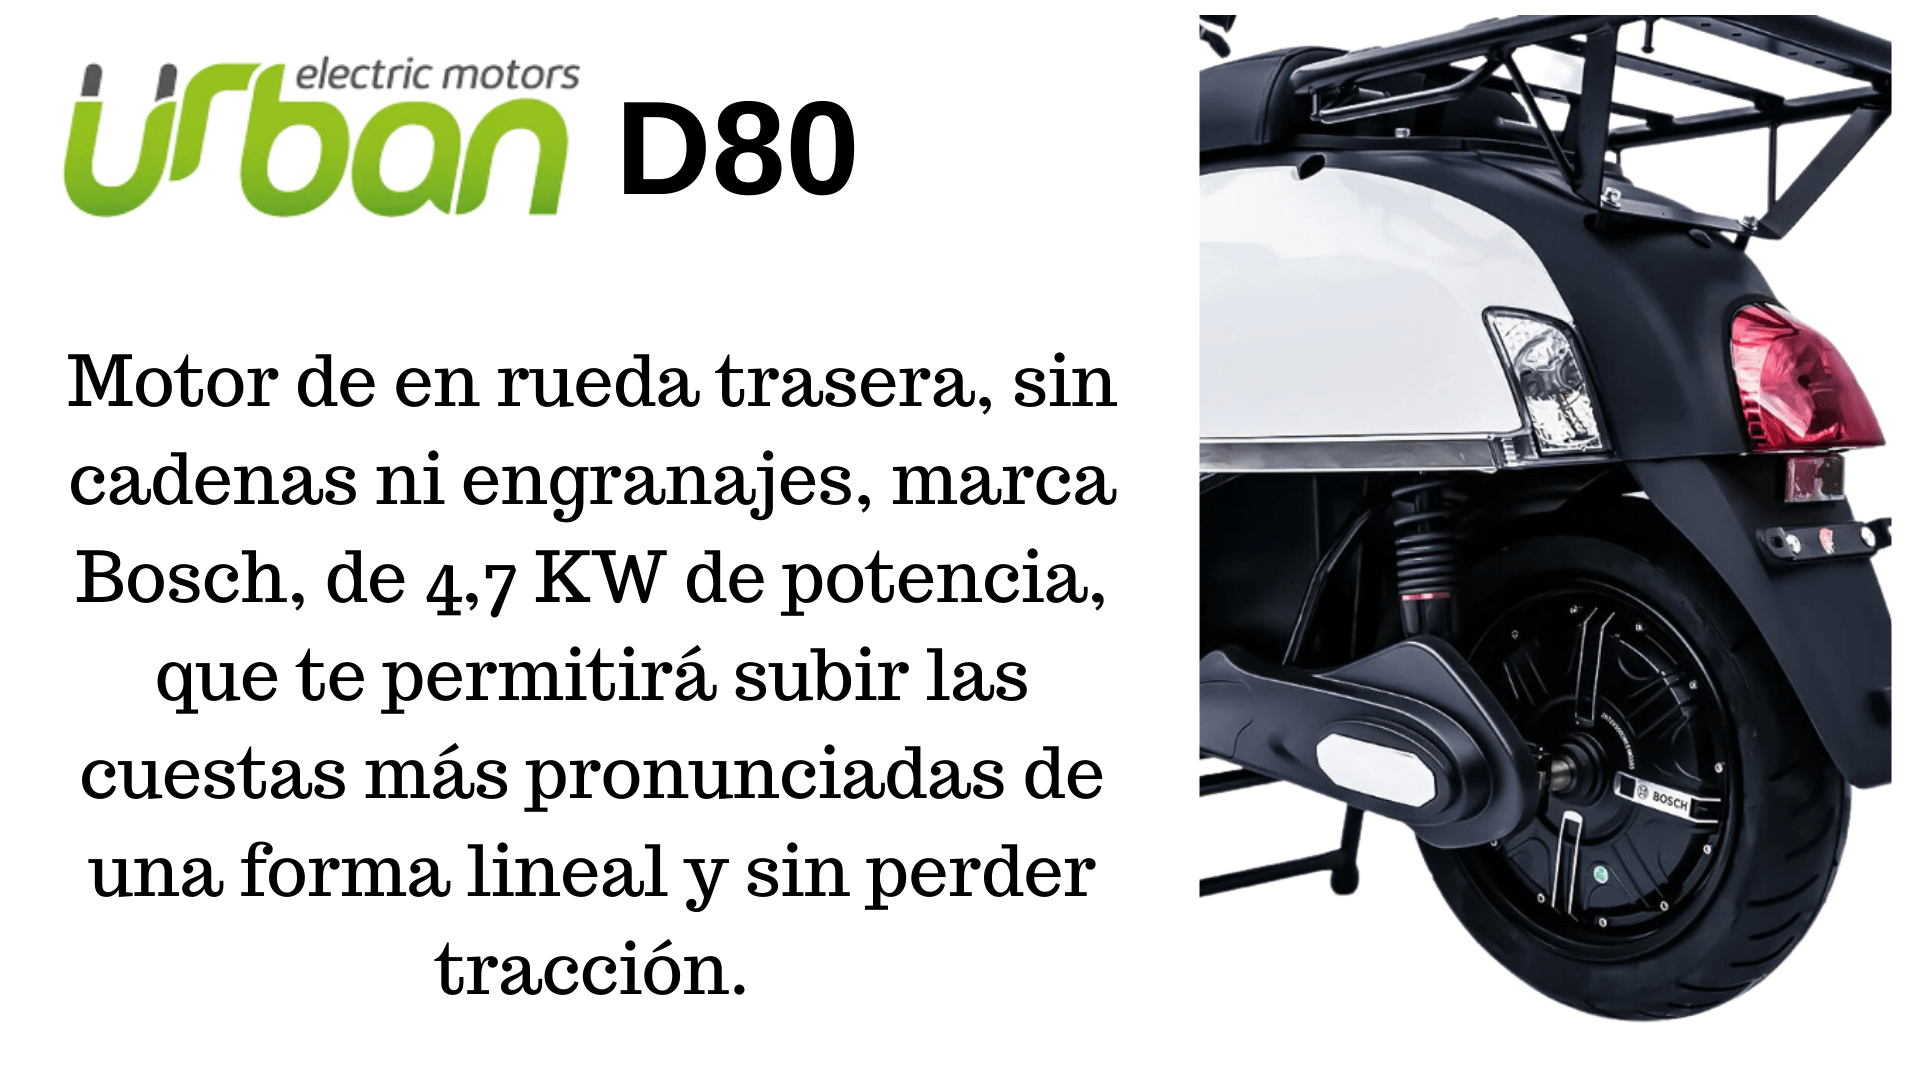 Moto eléctrica Urban D80